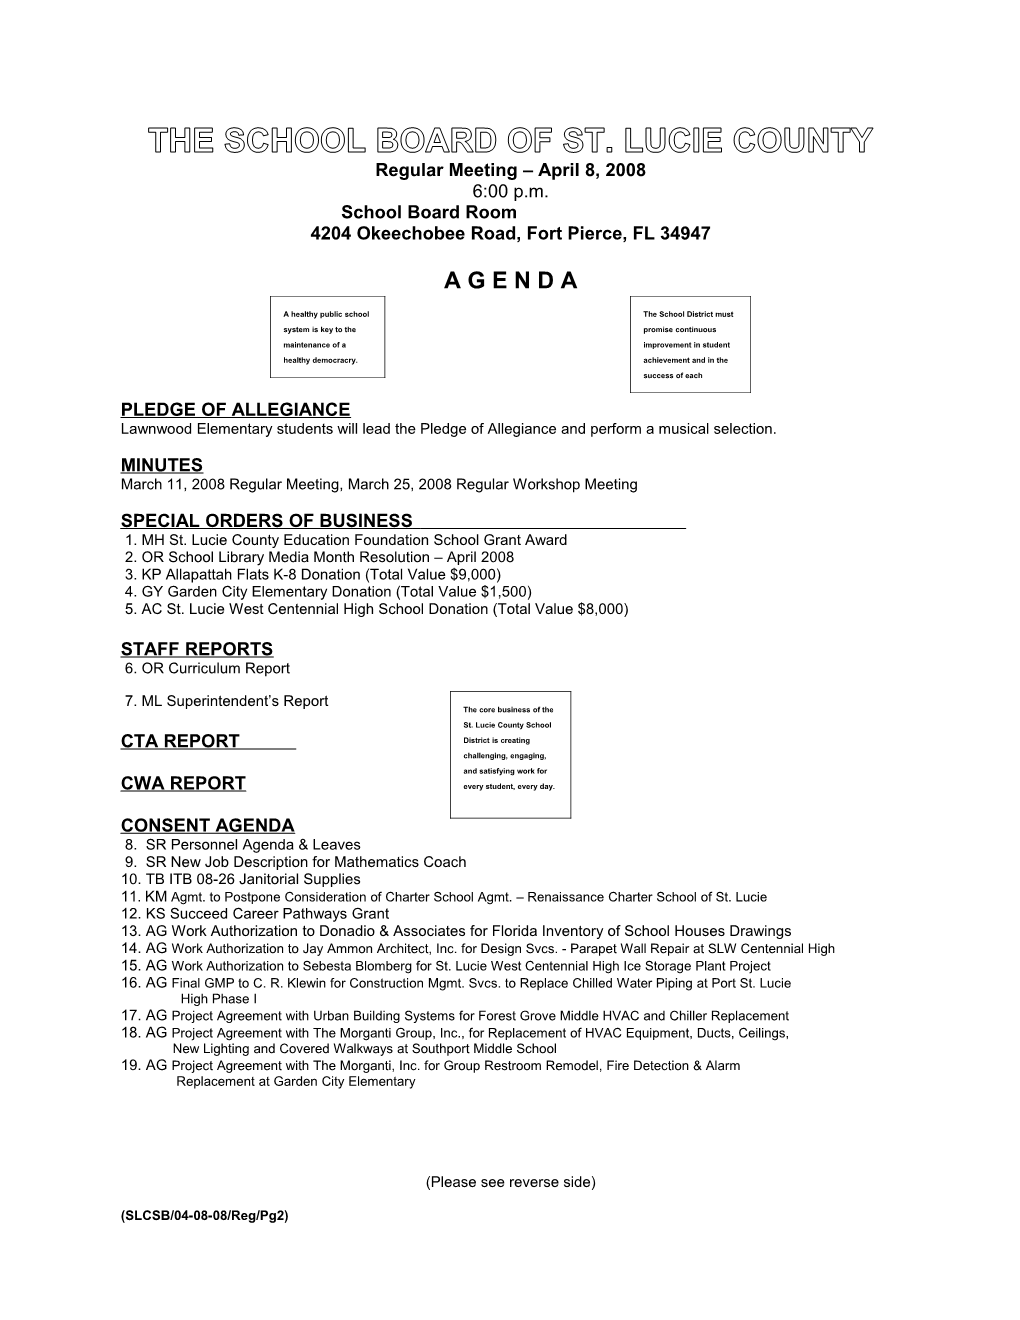 04-08-08 SLCSB Regular Meeting Agenda